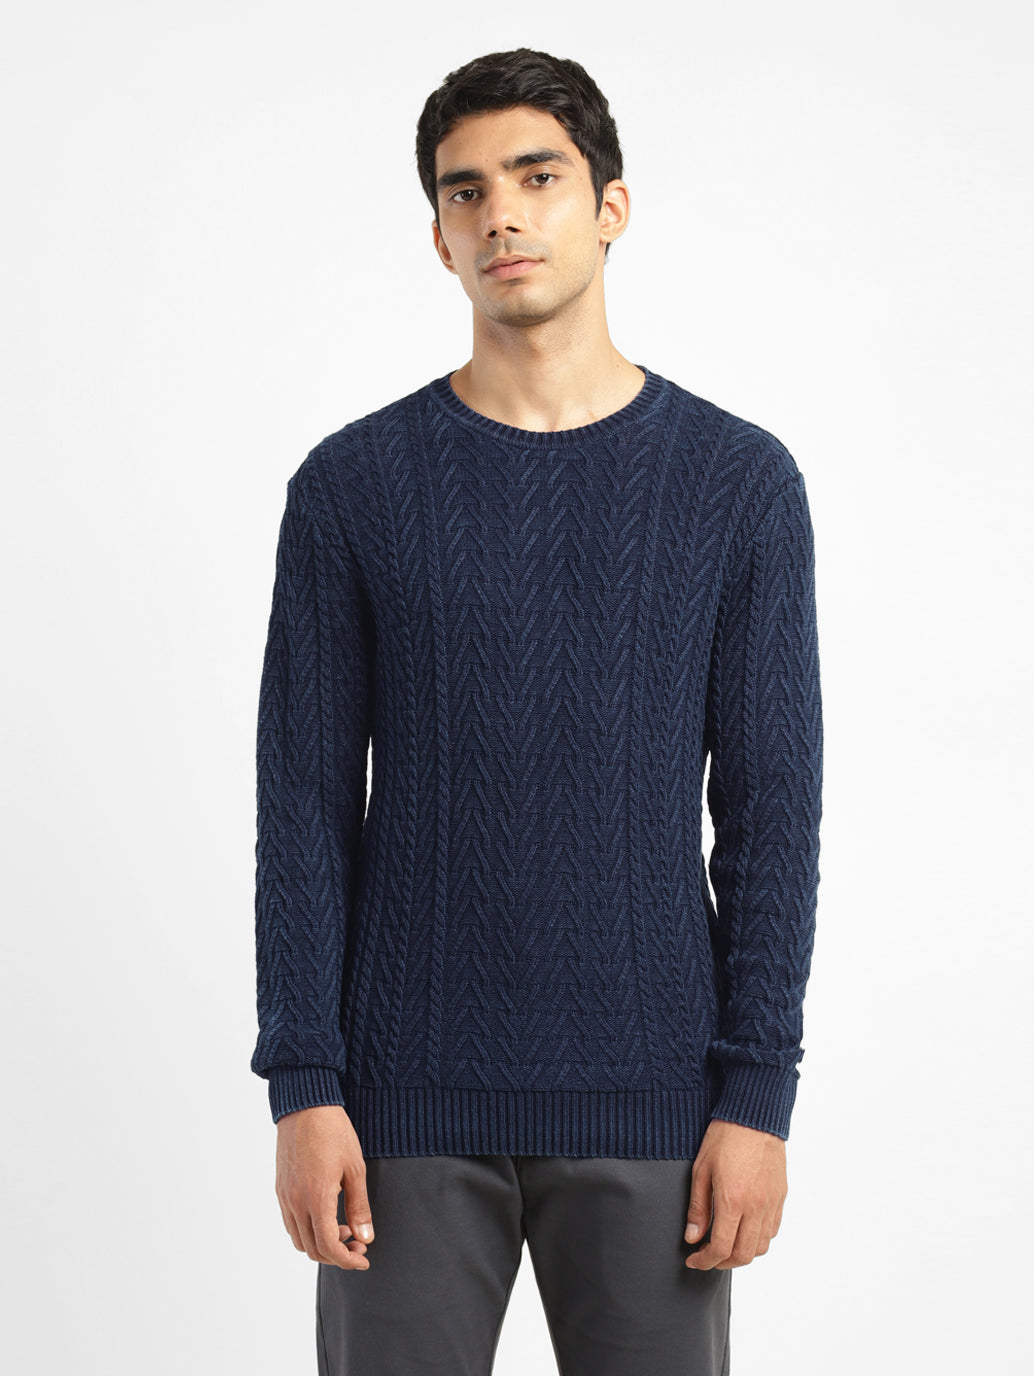 Men's Self Design Navy Crew Neck Sweater